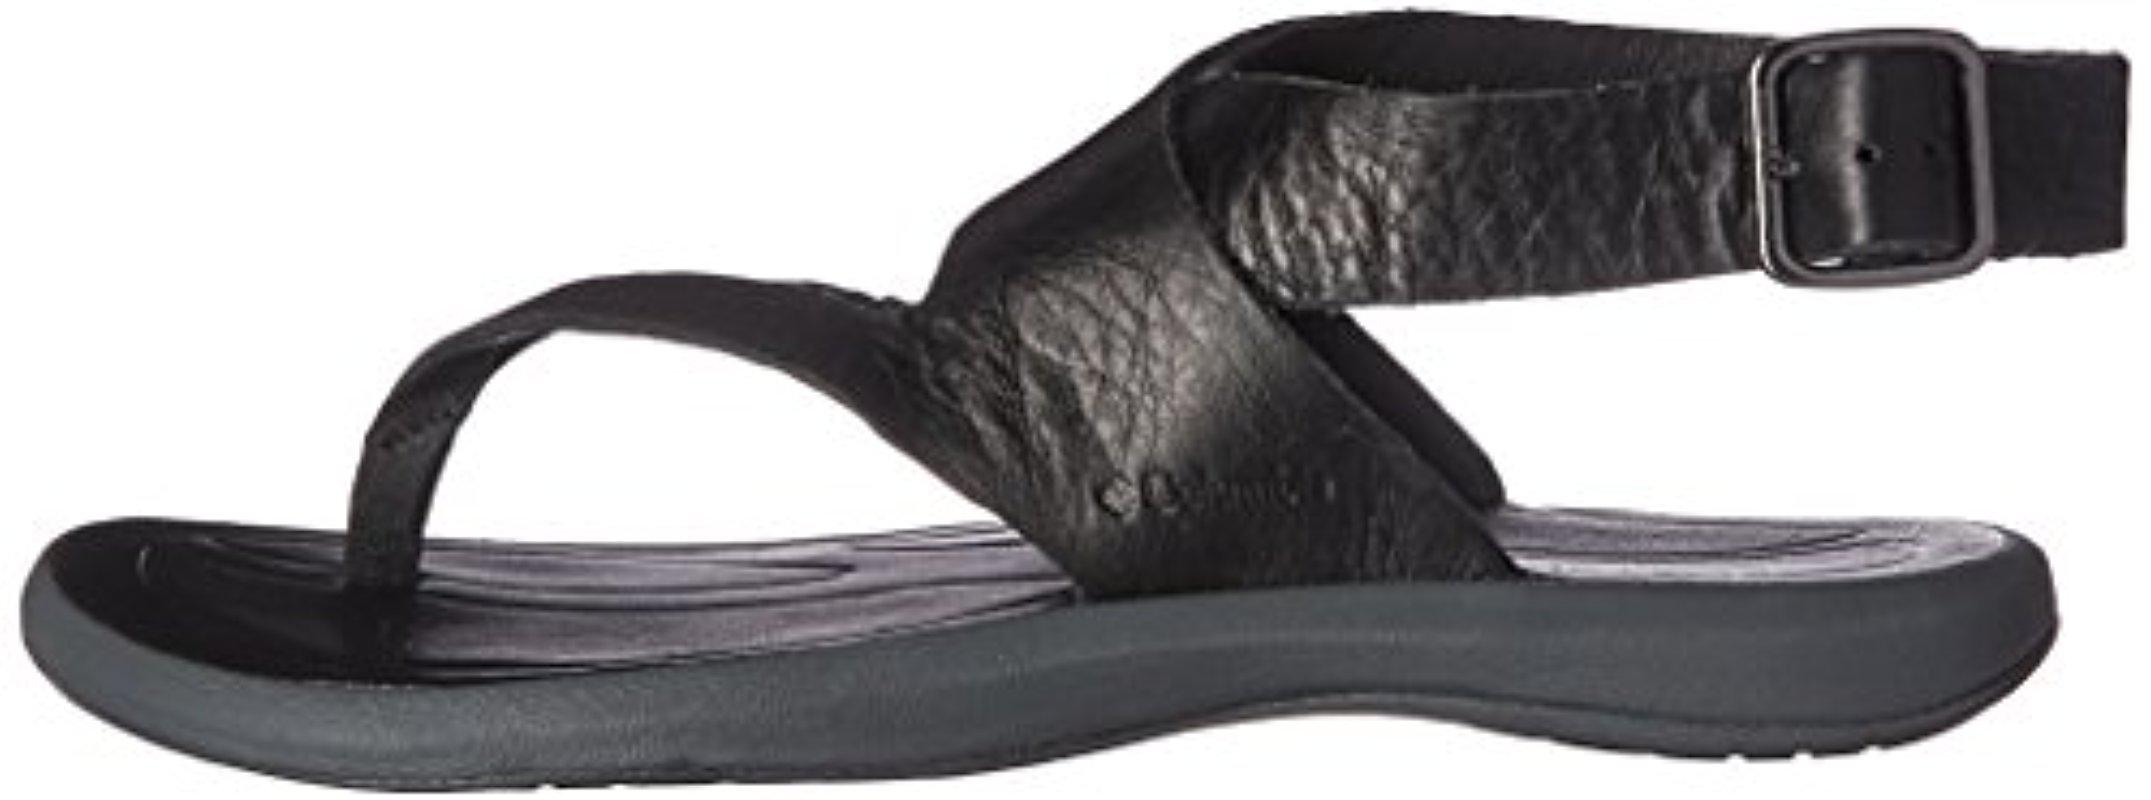 columbia caprizee leather sandal